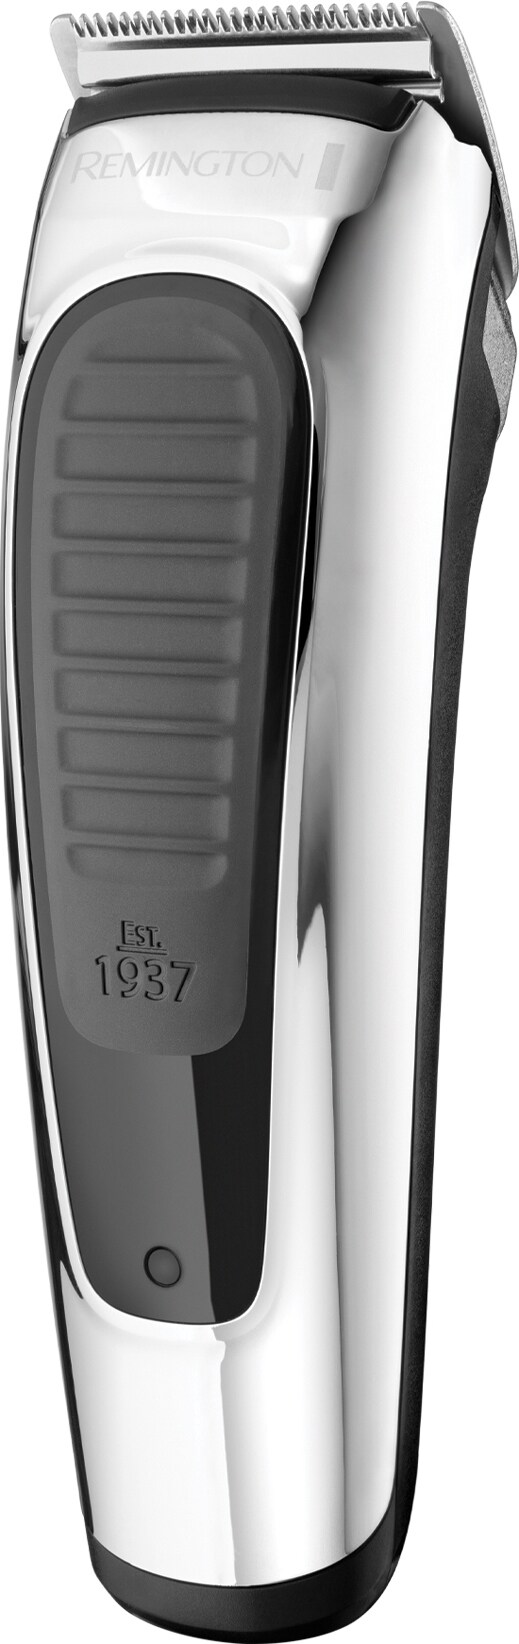 Remington Stylist trimmer HC450 thumbnail